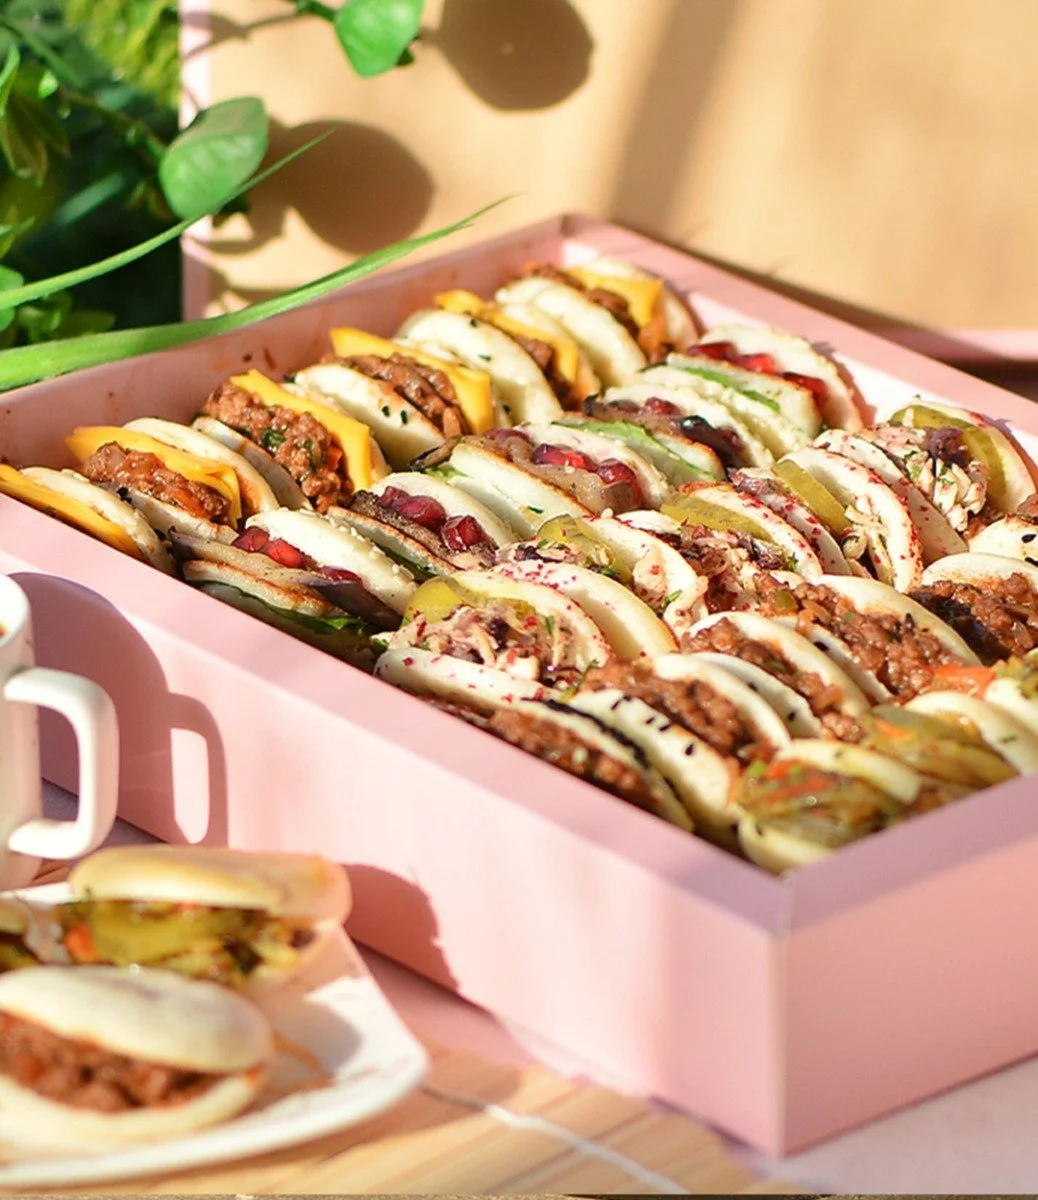 Mini Pita Sandwiches by Bakery & Co